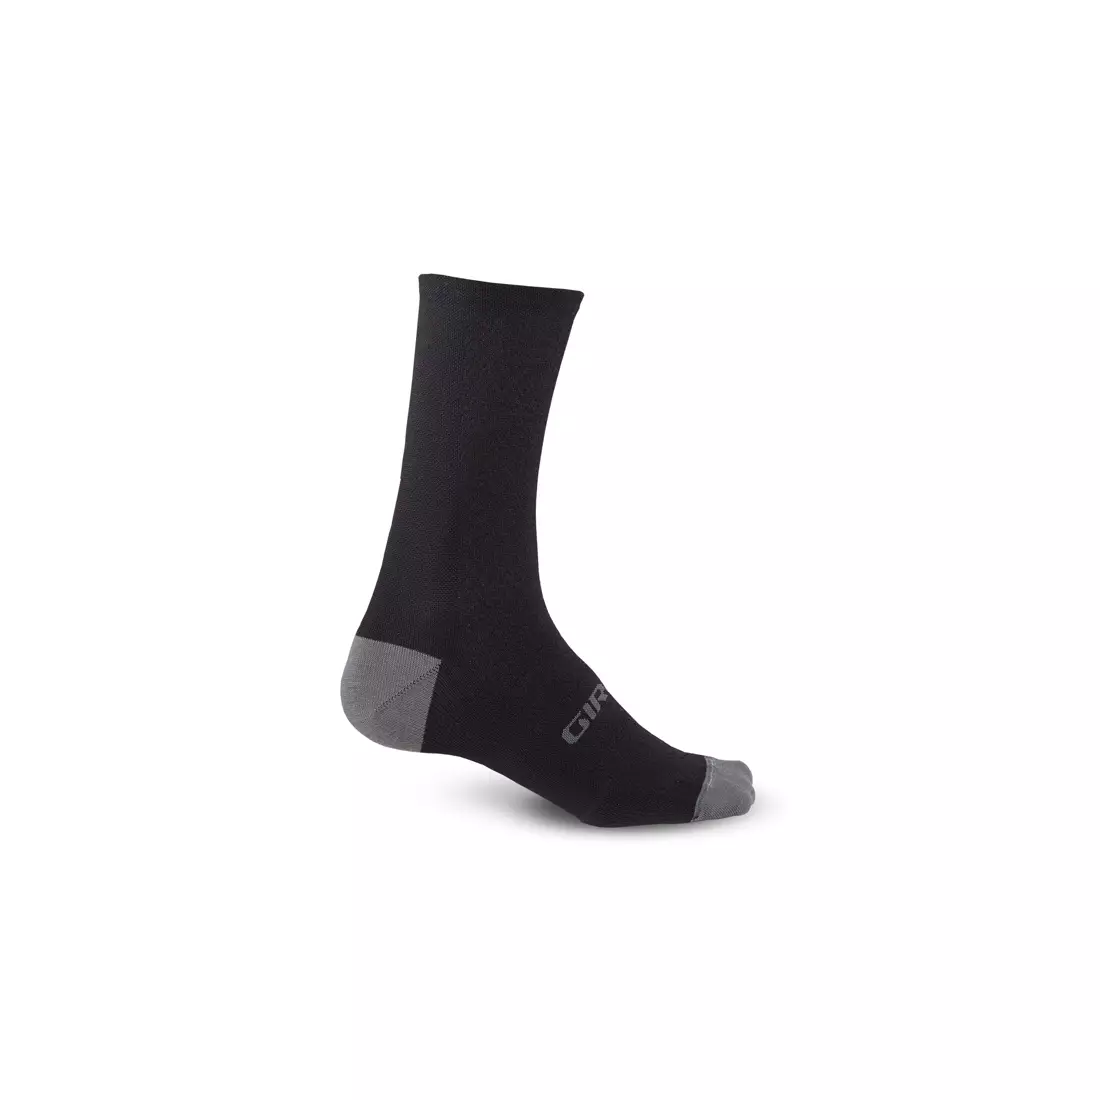 GIRO cycling socks hrc + merino wool black charcoal GR-7077534